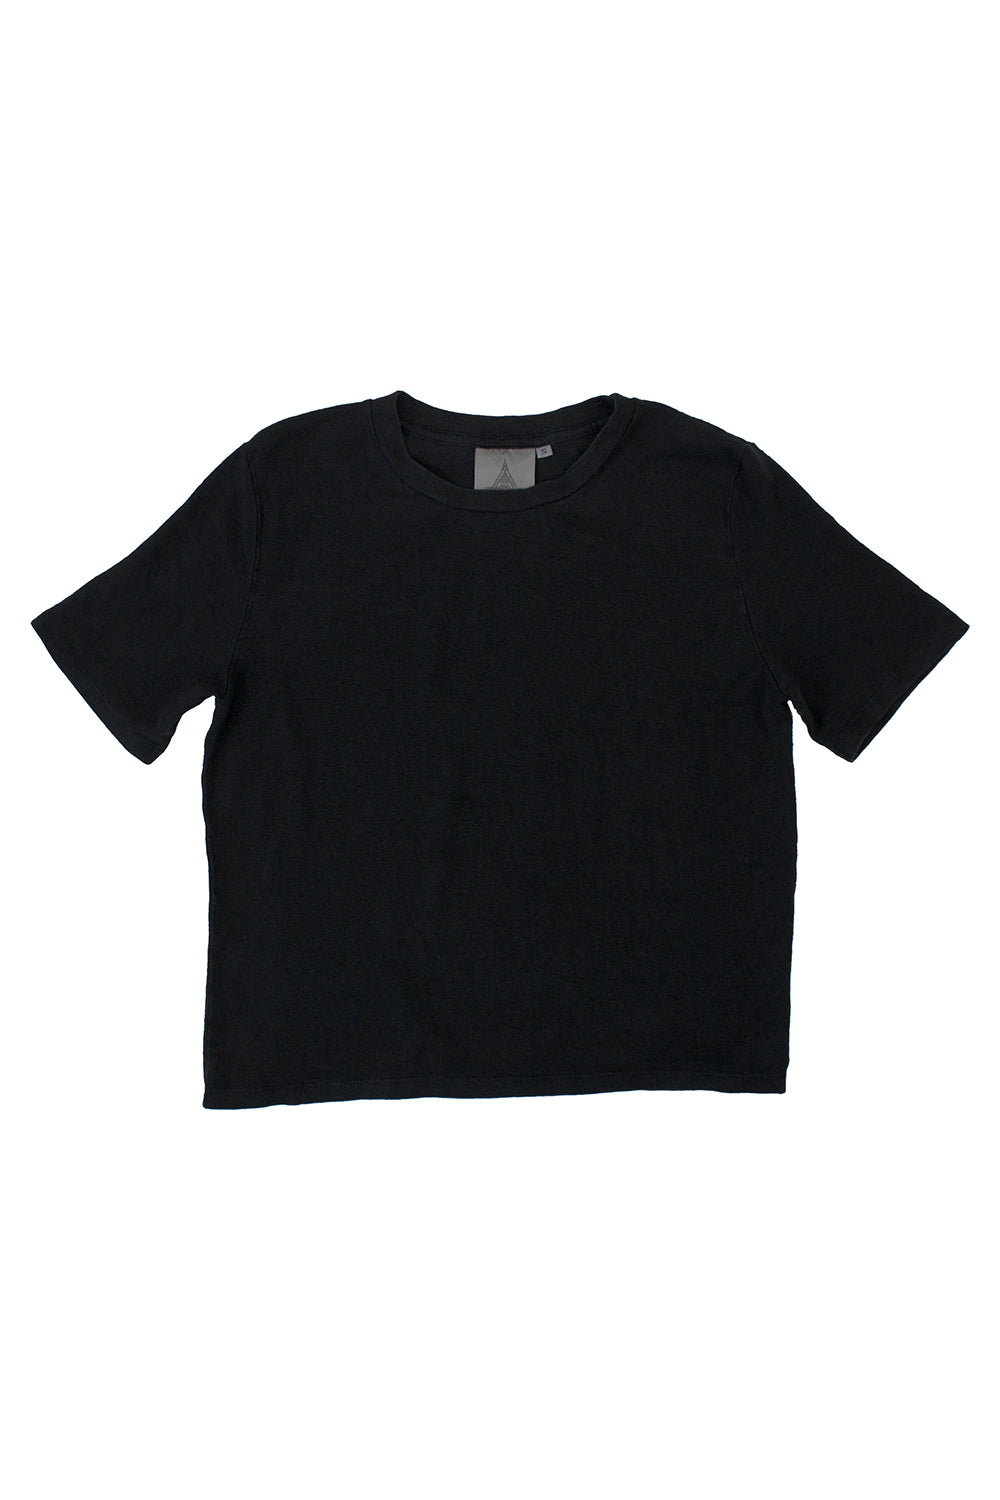 Dakota - 100% Hemp Cropped Tee | Jungmaven Hemp Clothing & Accessories / Color: Black